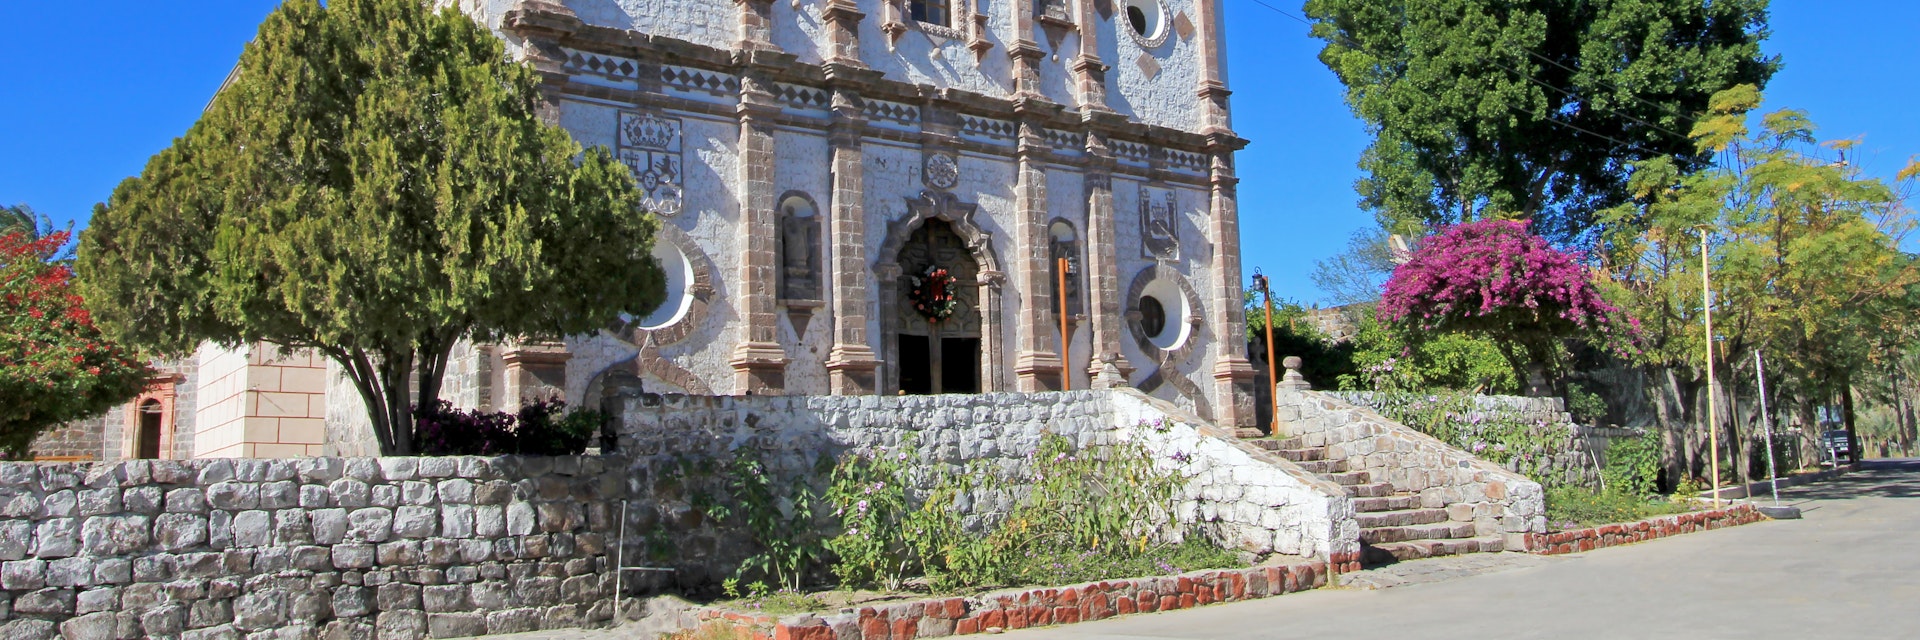 Mision San Ignacio Kadakaaman, in San Ignacio, Baja California Sur, Mexico.